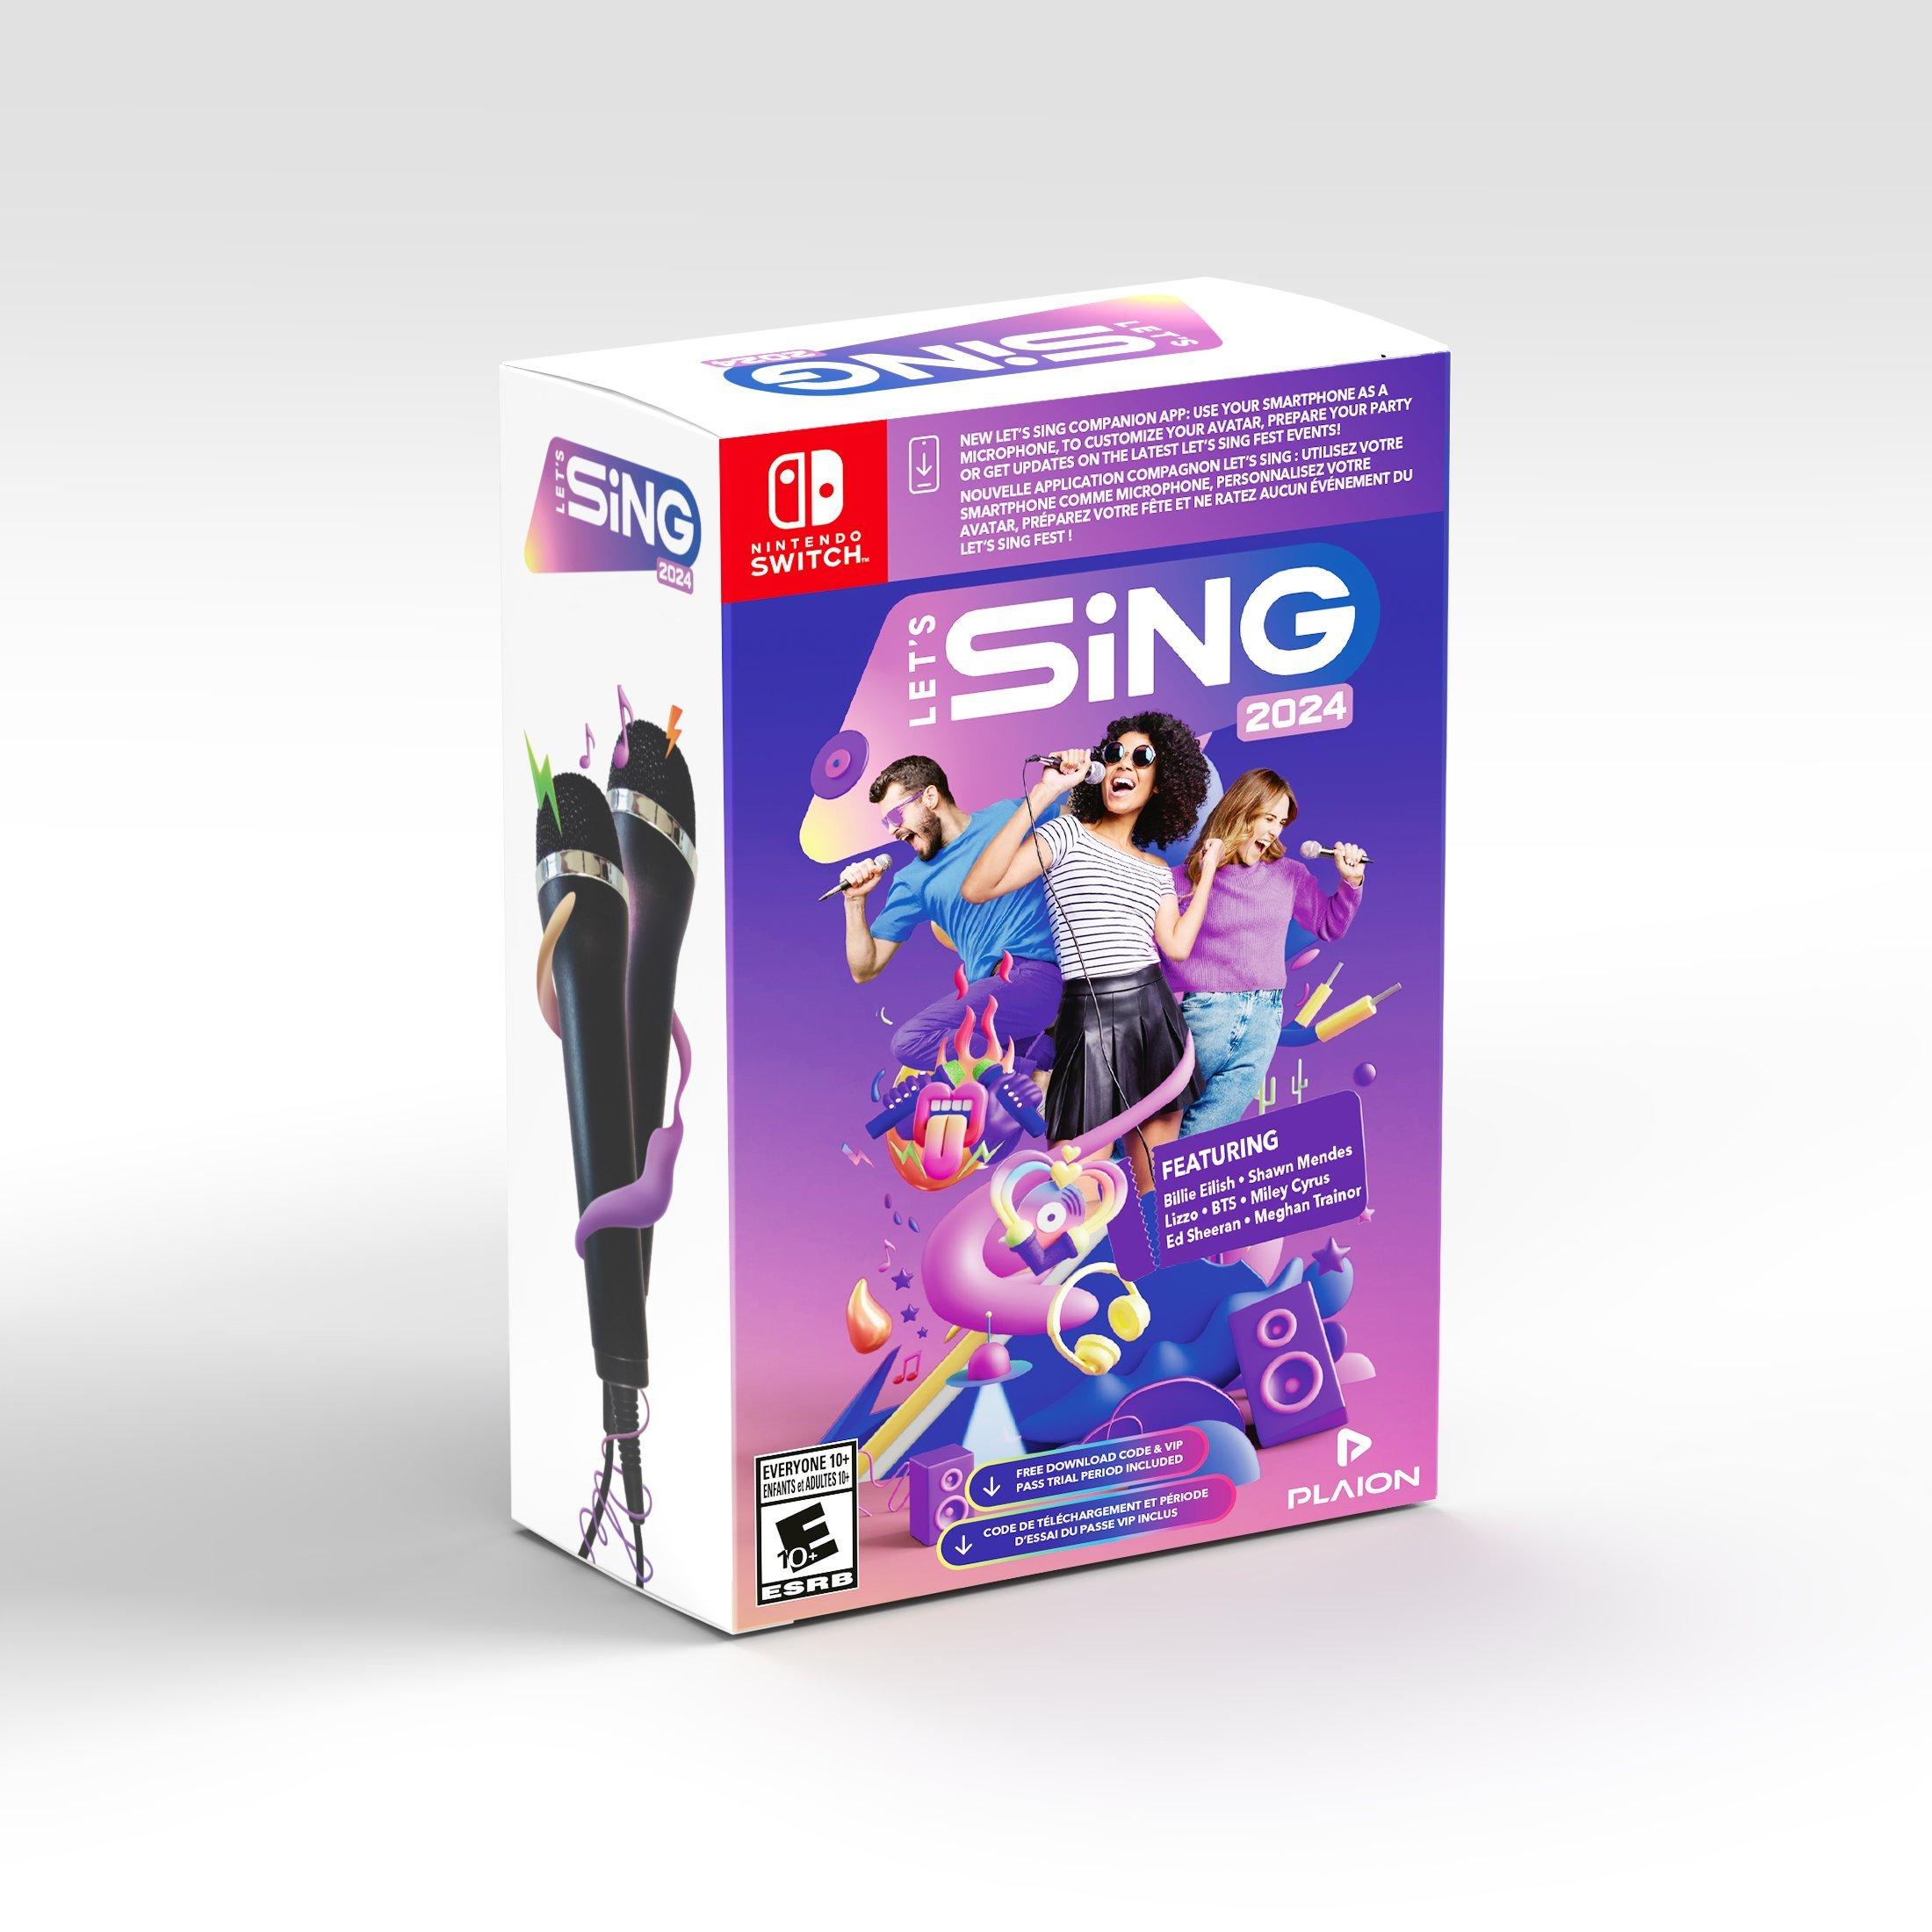 Wireless Karaoke Microphone for Nintendo Switch / PC